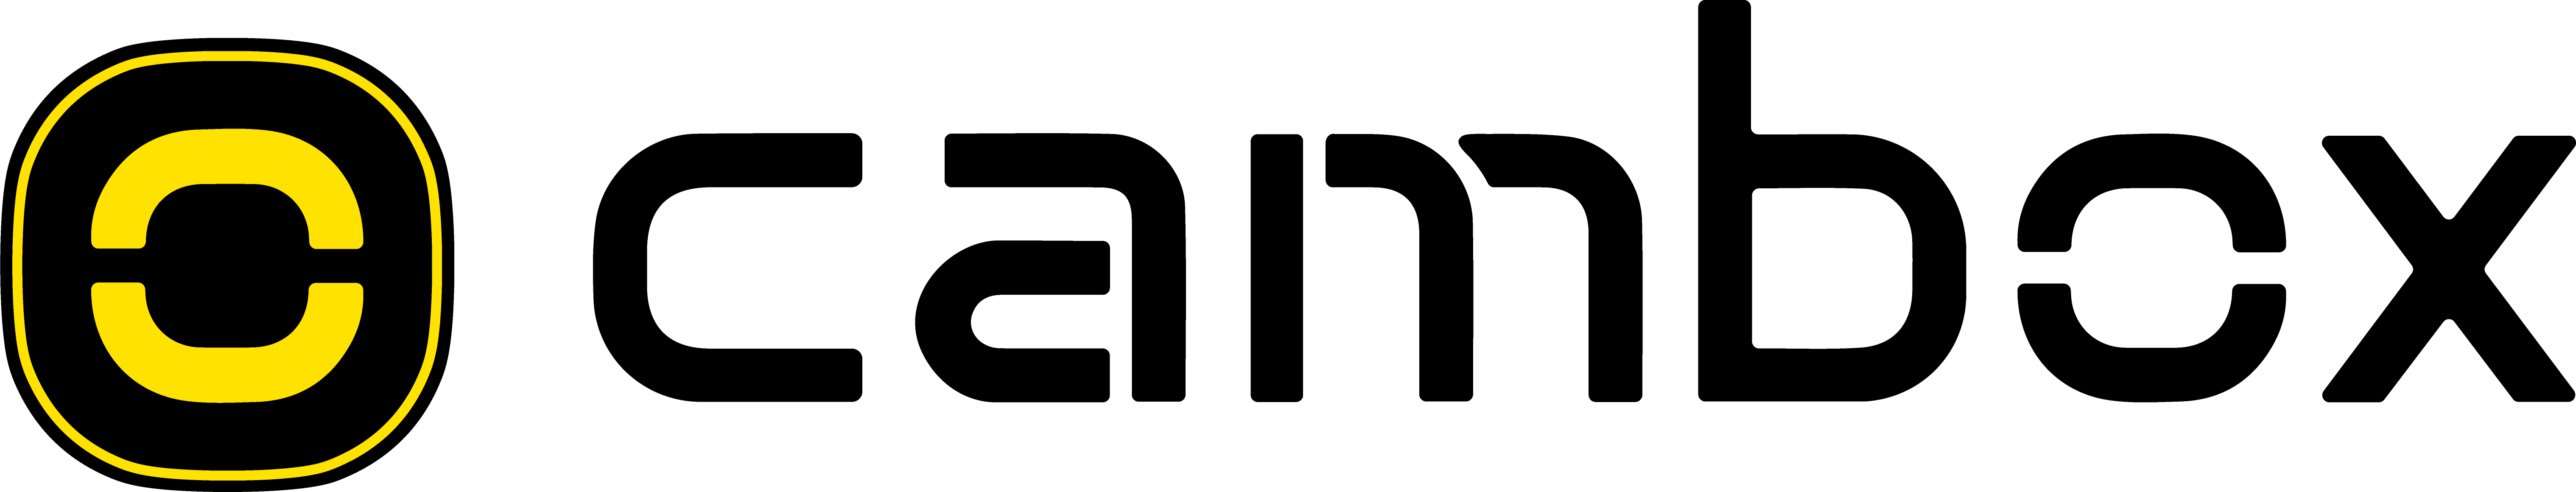 CAMBOX logo